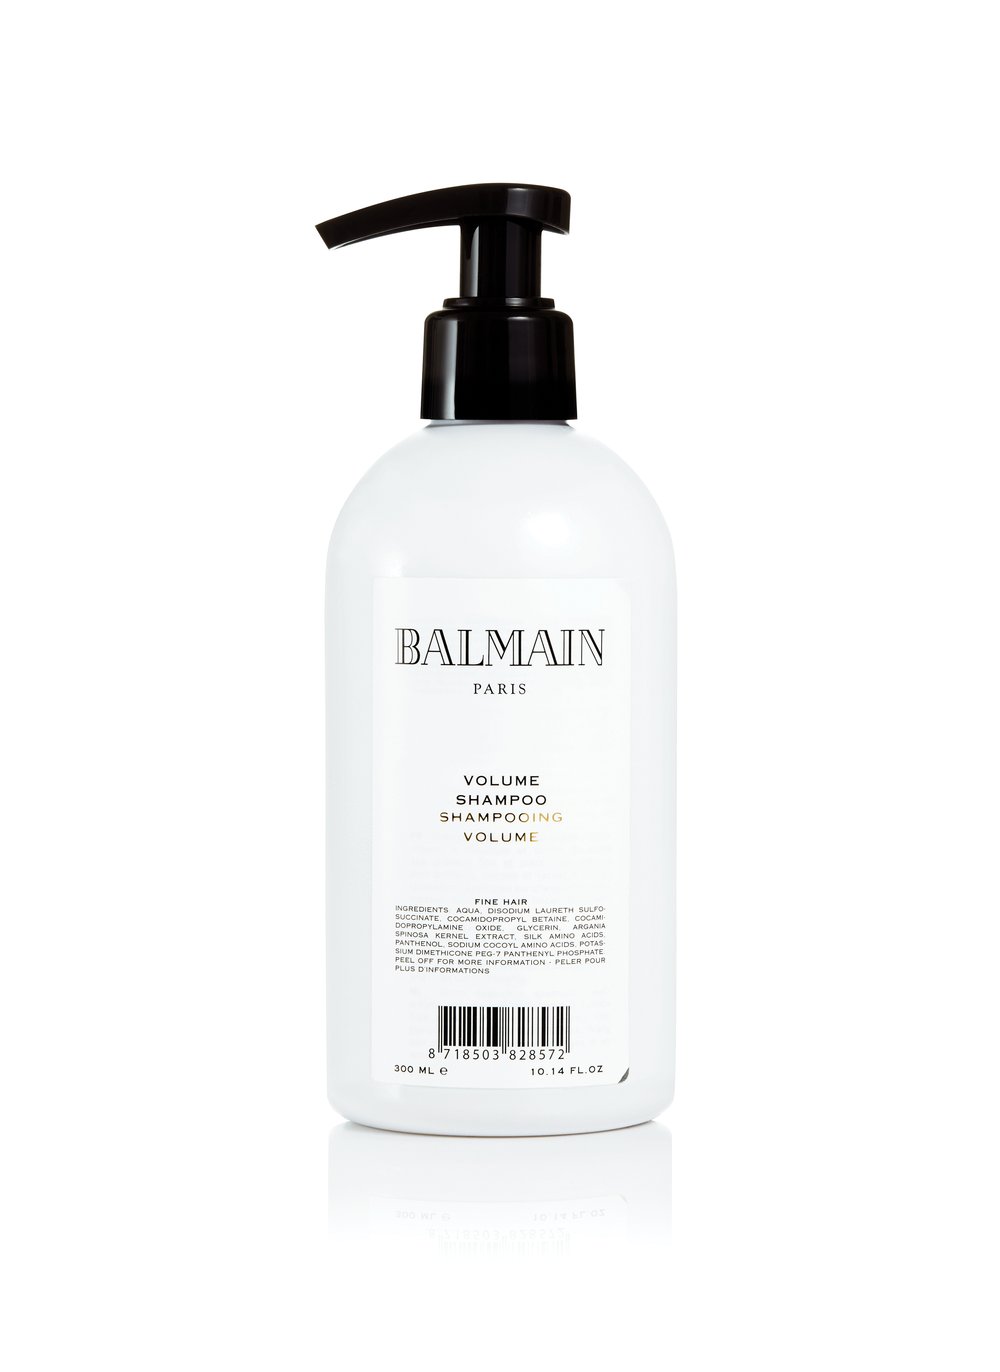 Balmain Volume Shampoo 300ml 1827